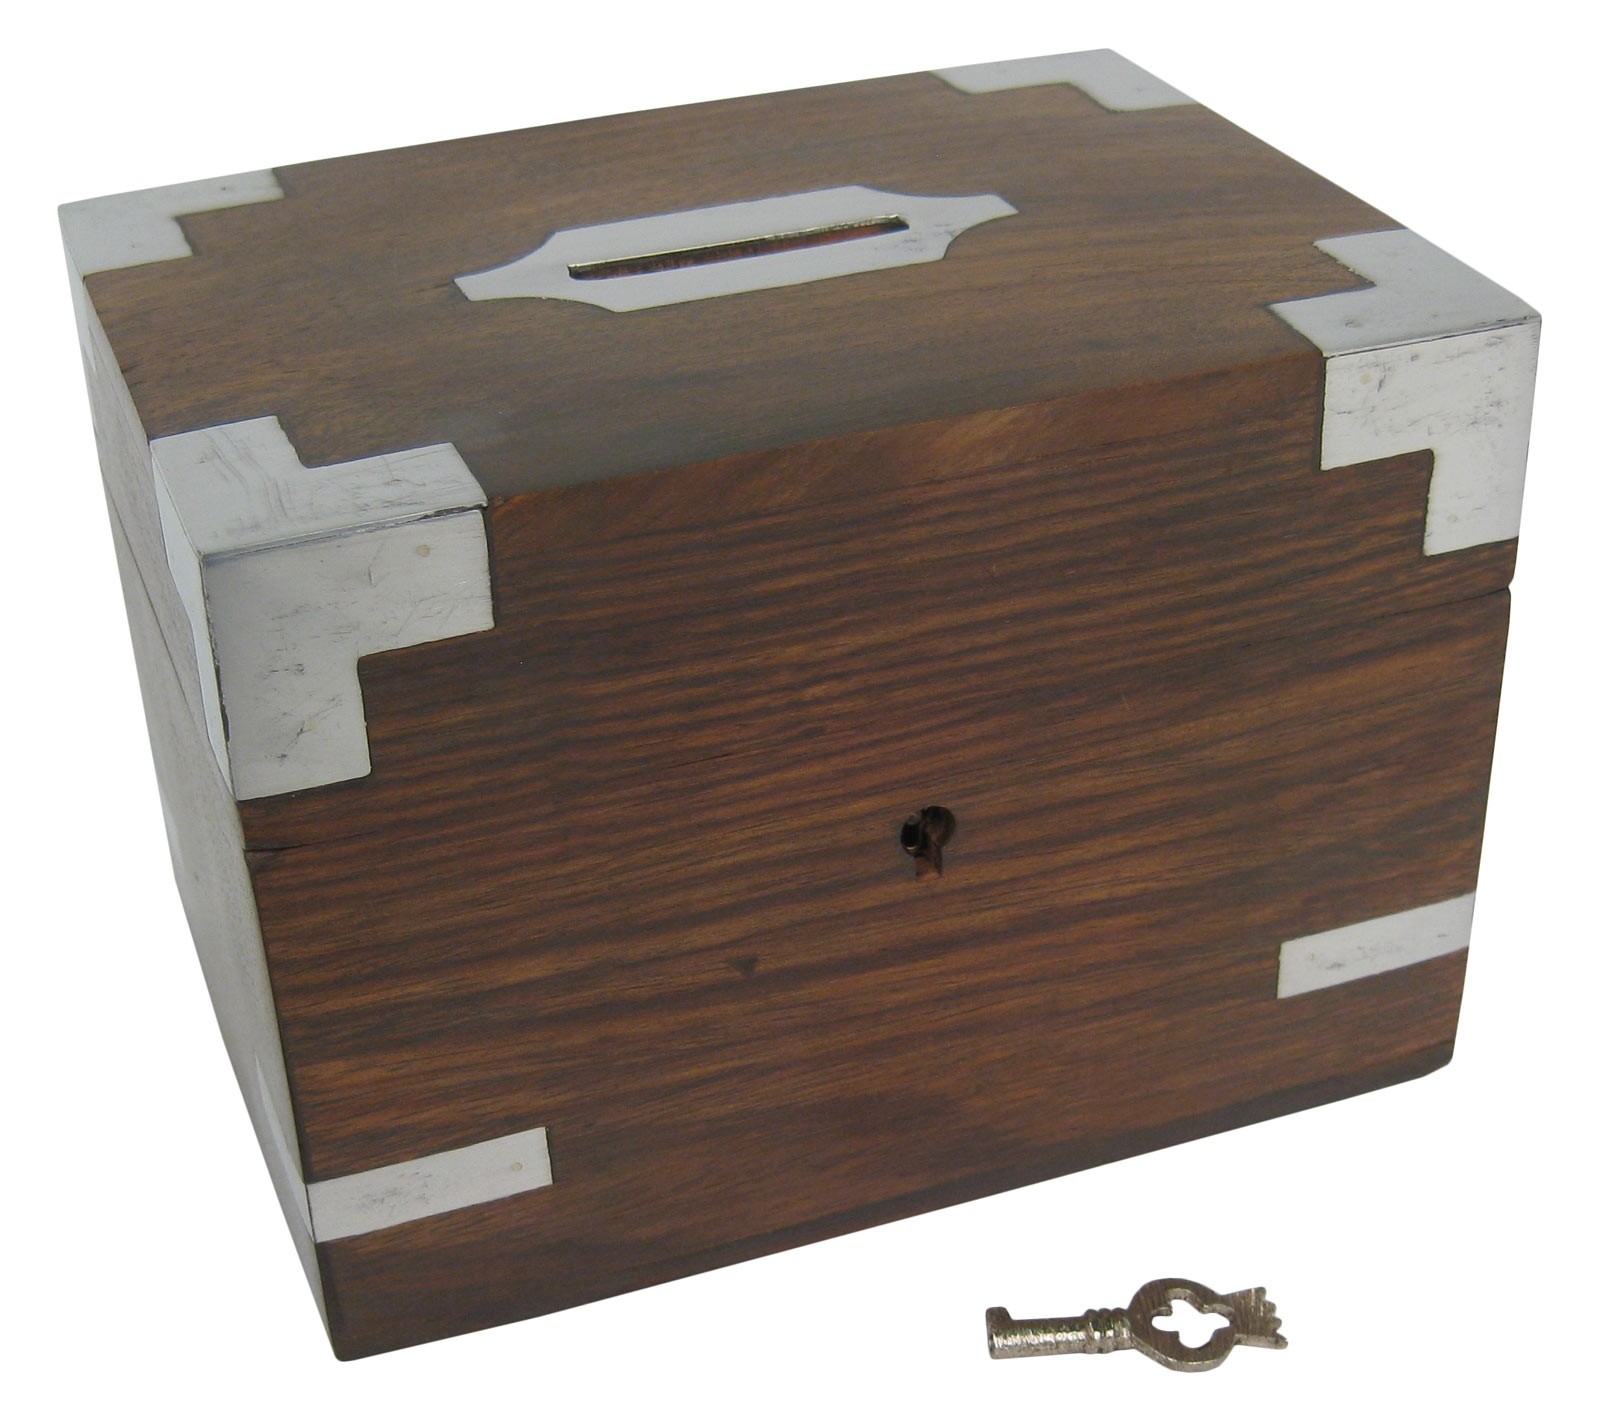 Money Box with Key 14cm